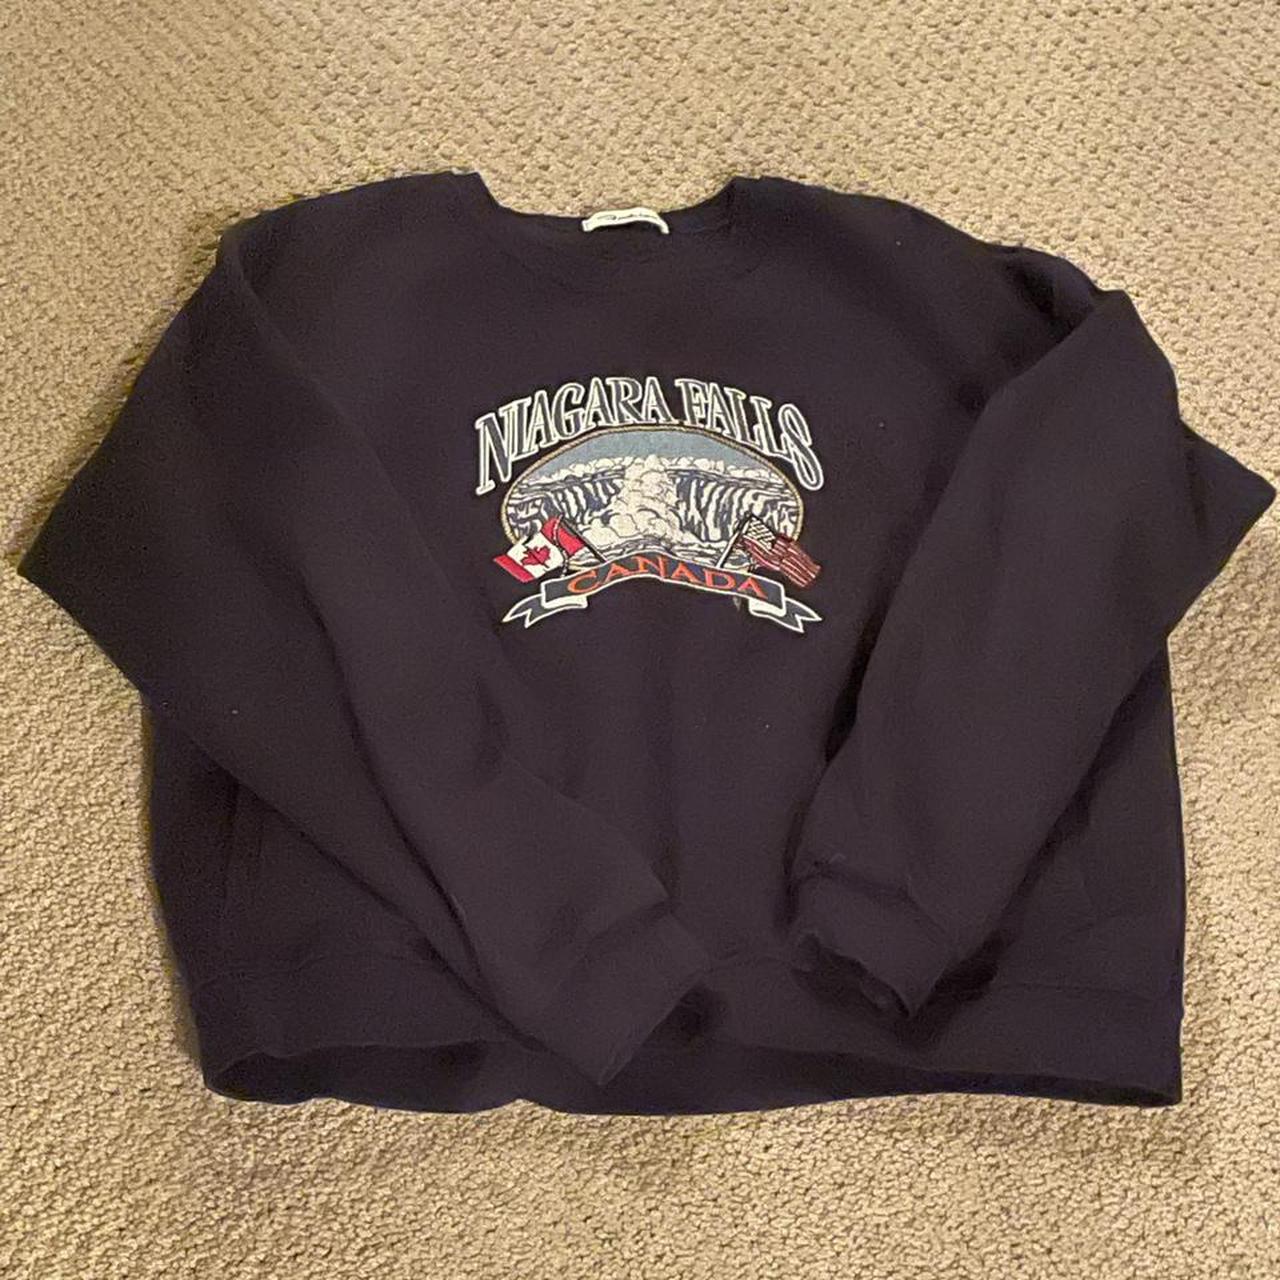 Product Image 1 - niagara falls navy blue sweatshirt